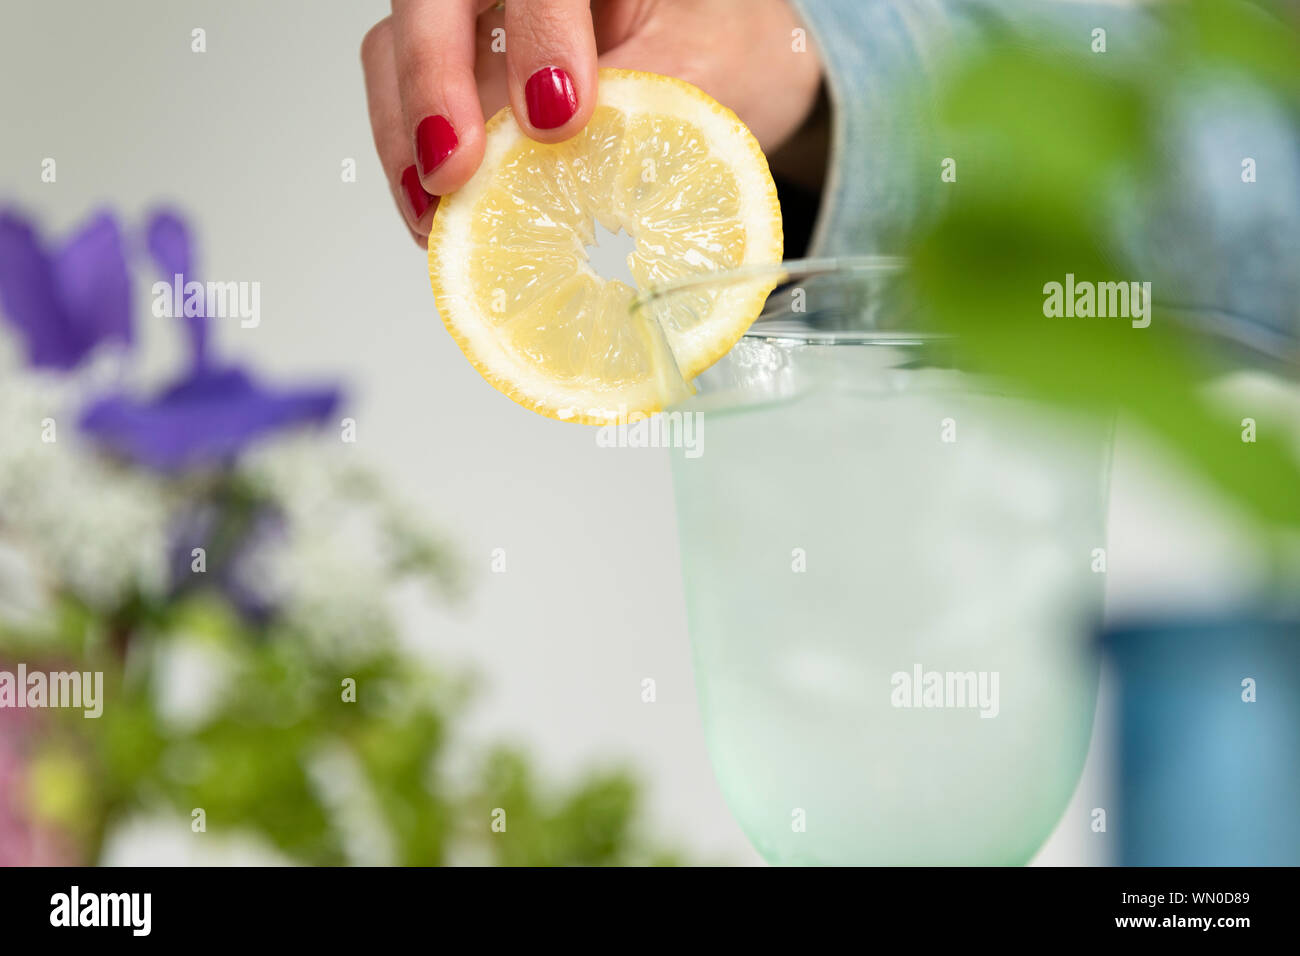 Woman putting lemon slice on glass of water Stock Photo